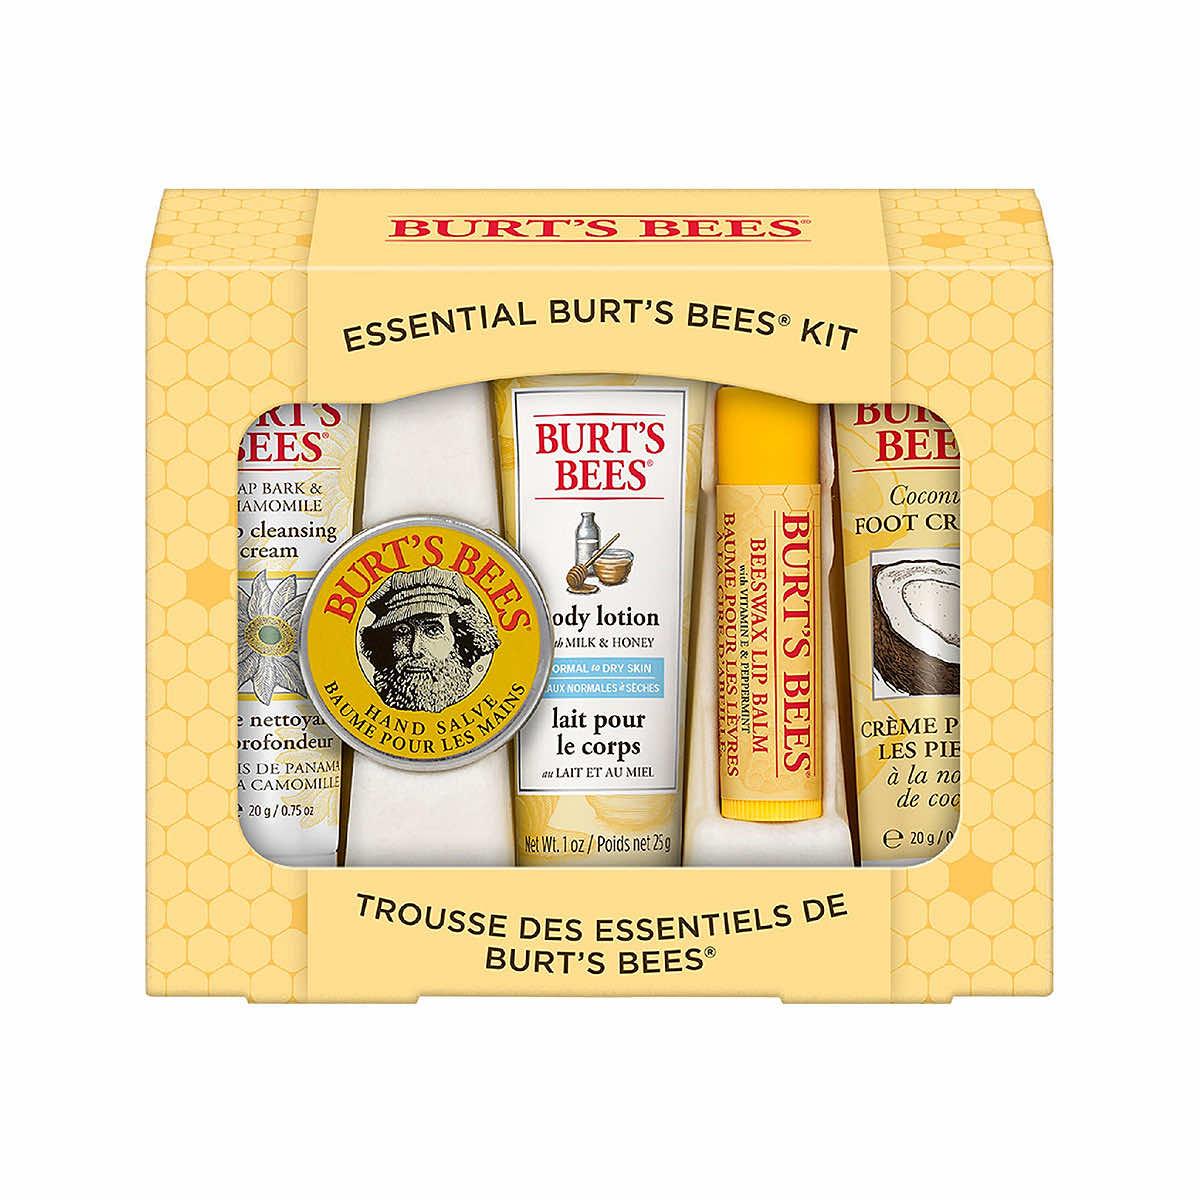  Essential Burt's Bees Kit